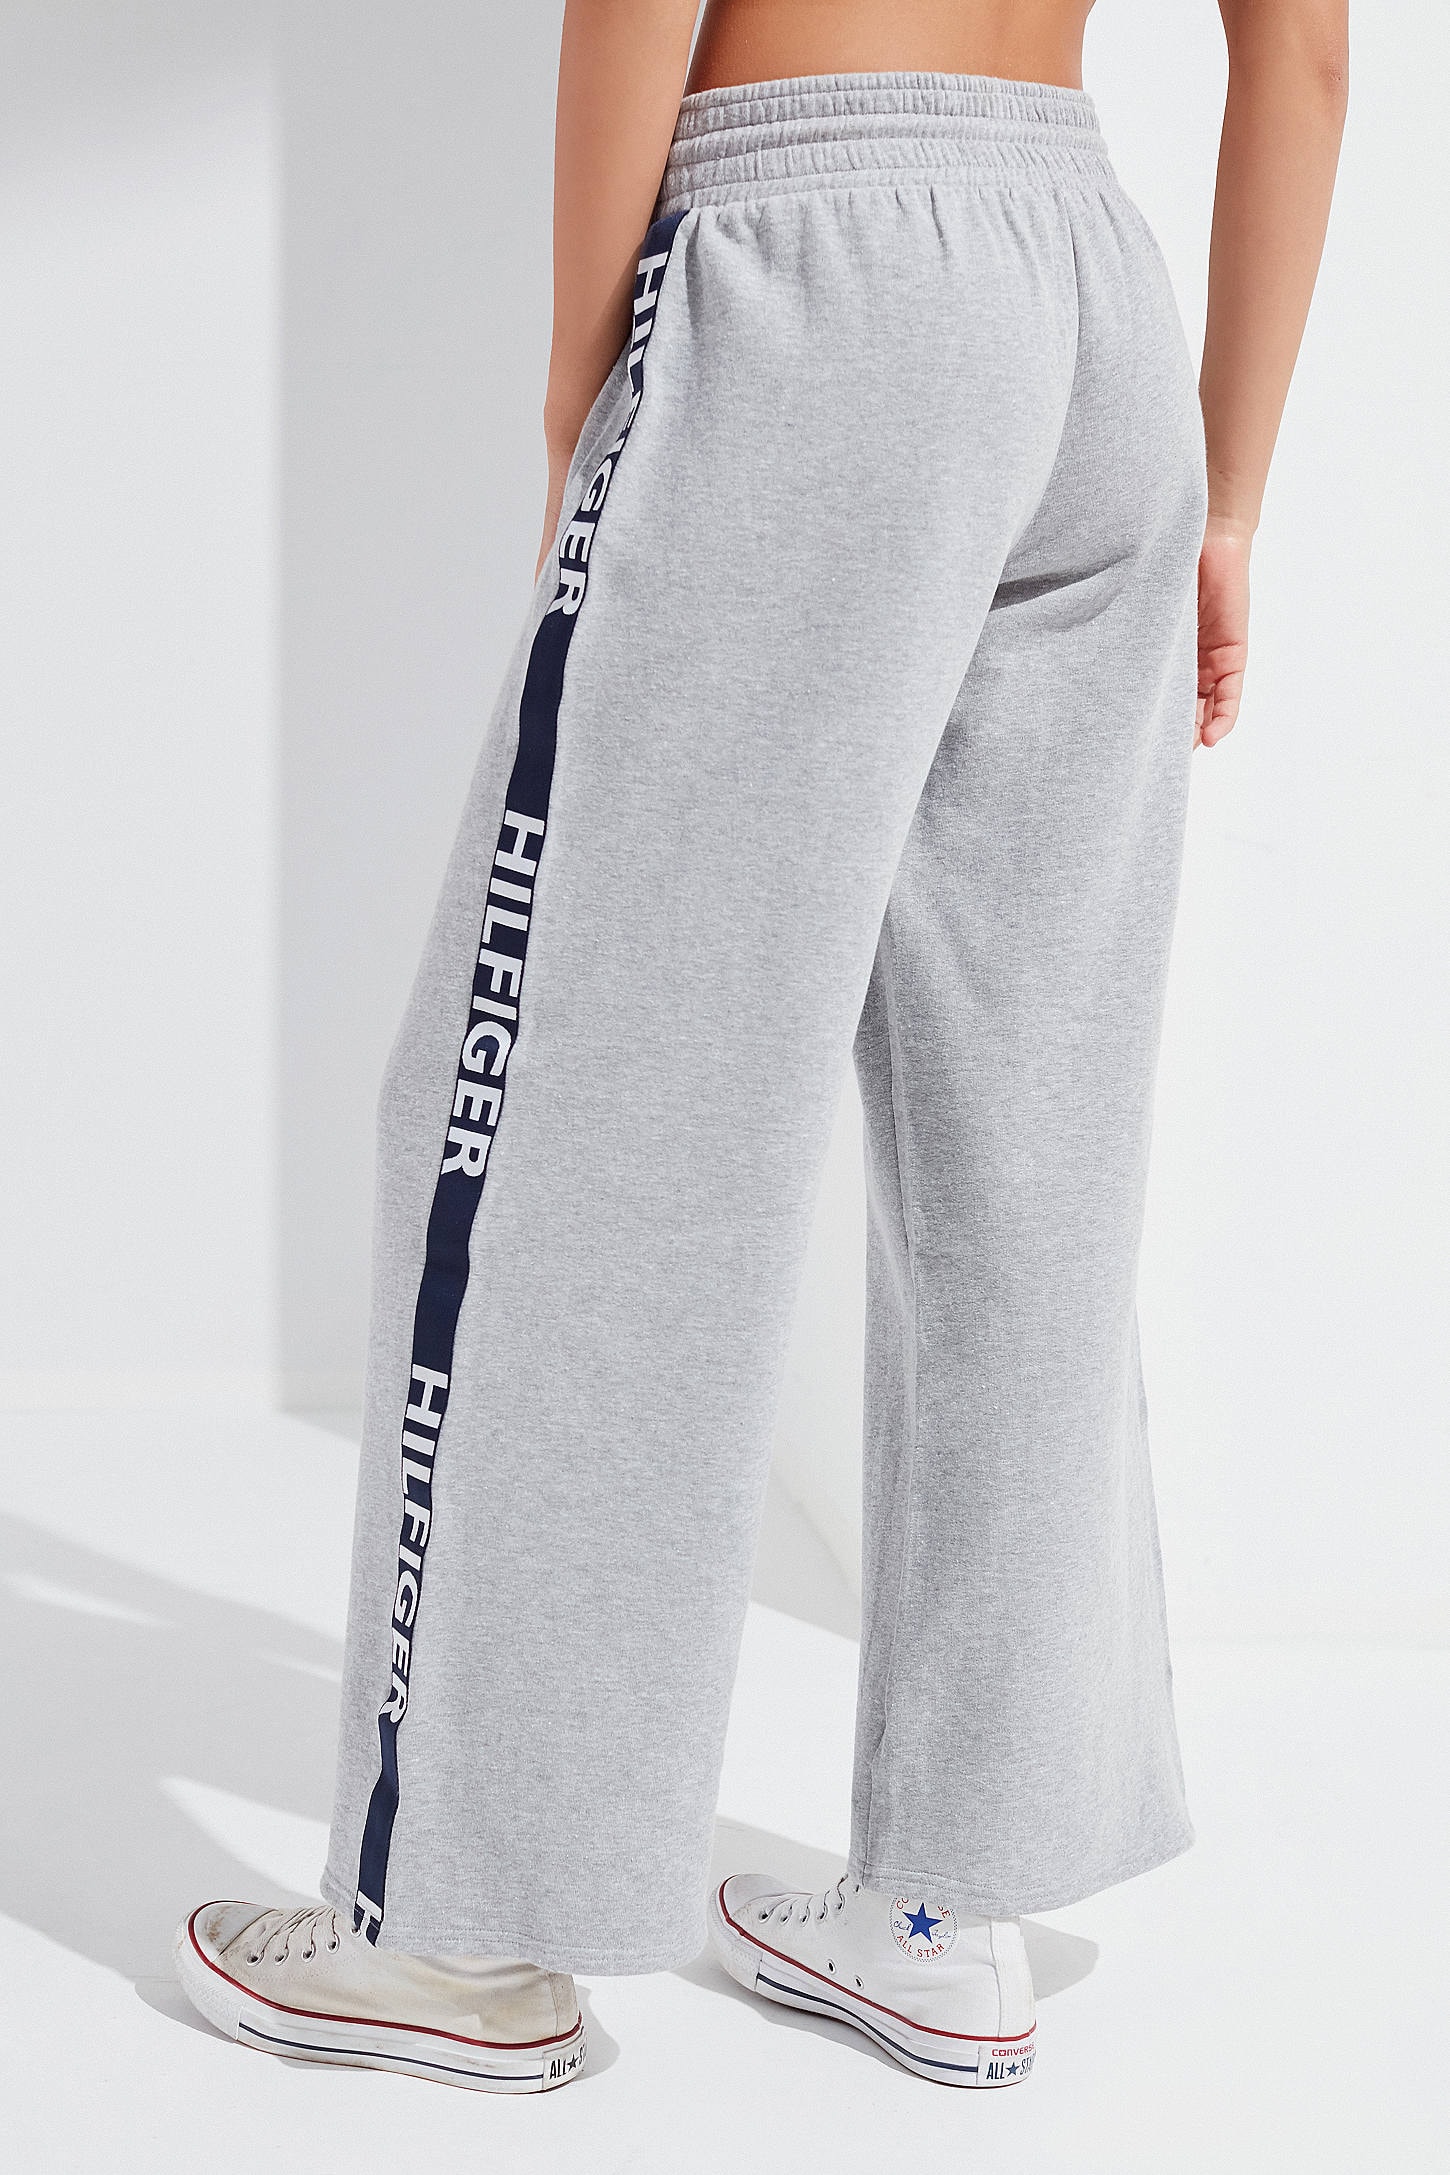 Tommy Hilfiger x Urban Outfitters Logo Set Grey Sweatpants Sweatshirt Cropped Cozy Loungewear Track Pants